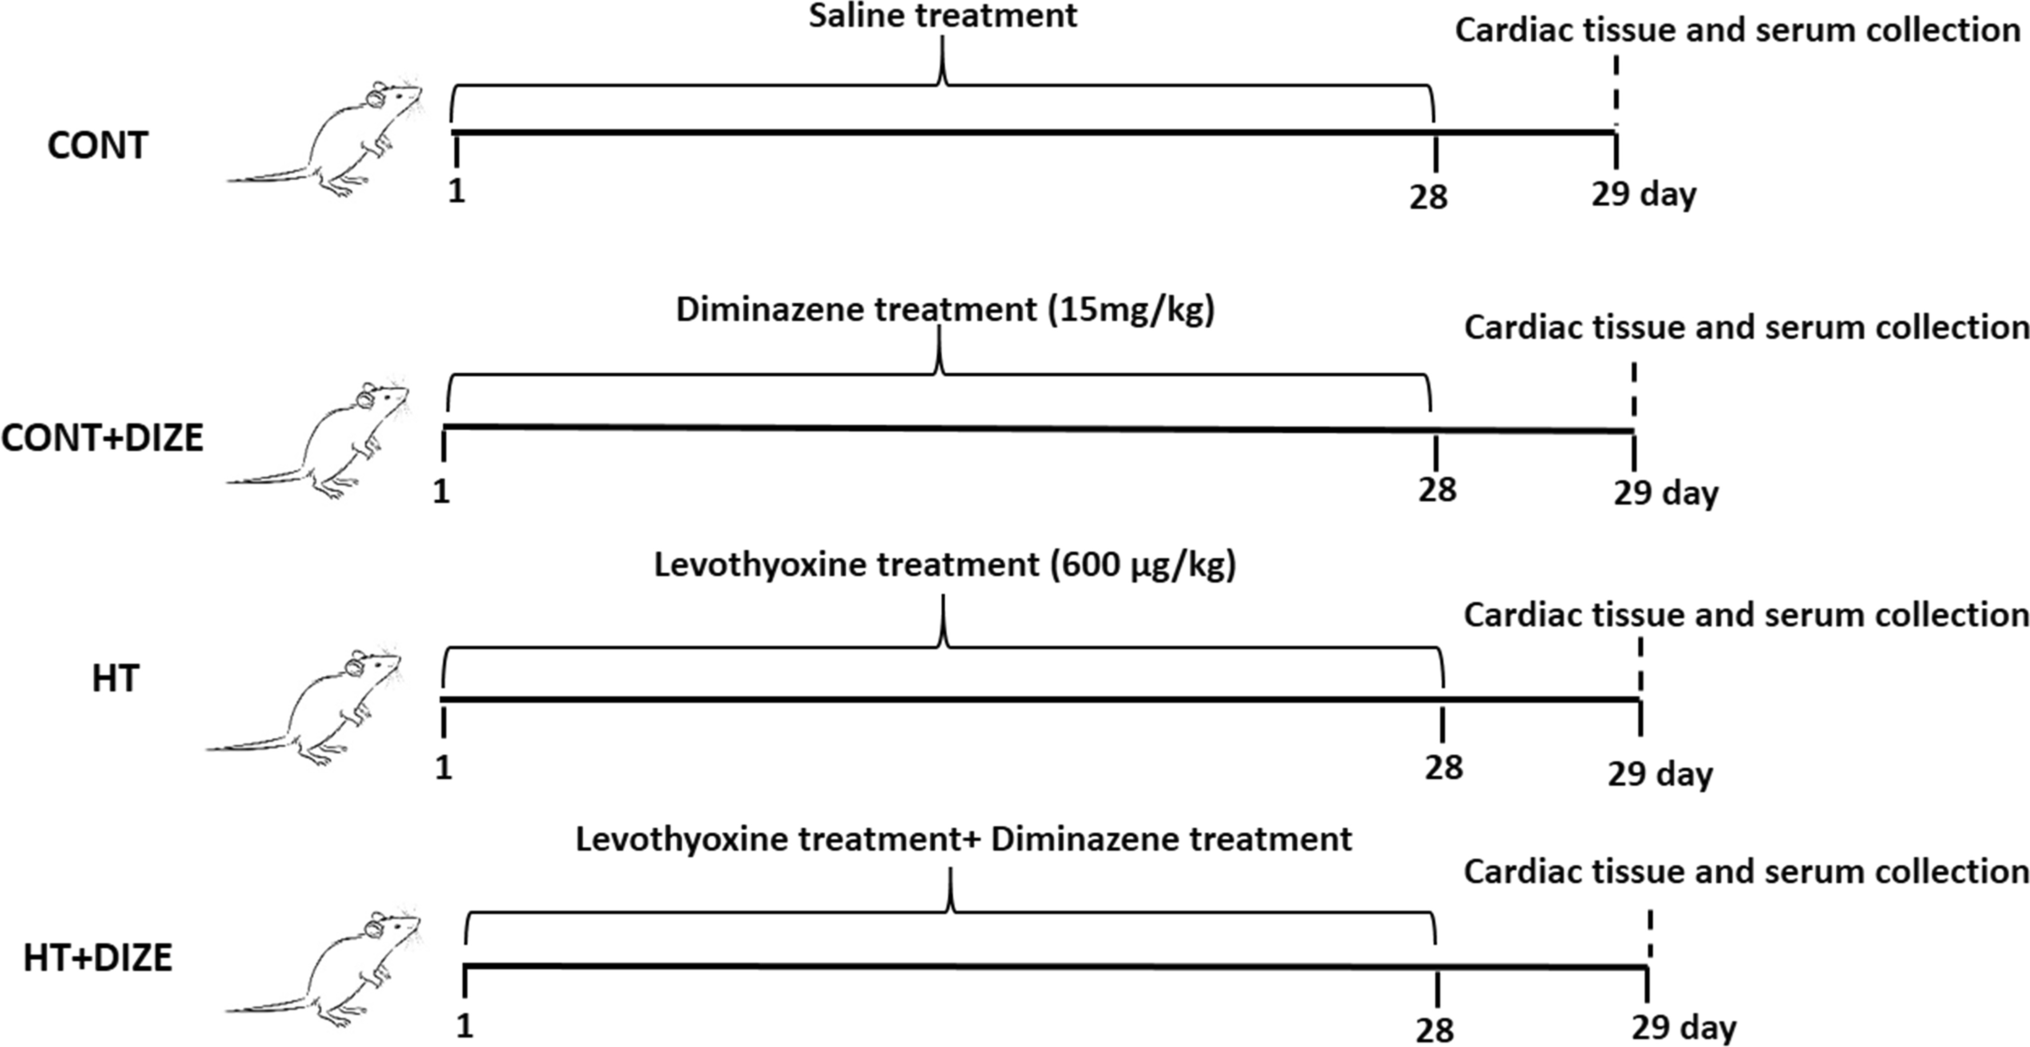 Effect of diminazene on cardiac hypertrophy through mitophagy in rat models with hyperthyroidism induced by levothyroxine